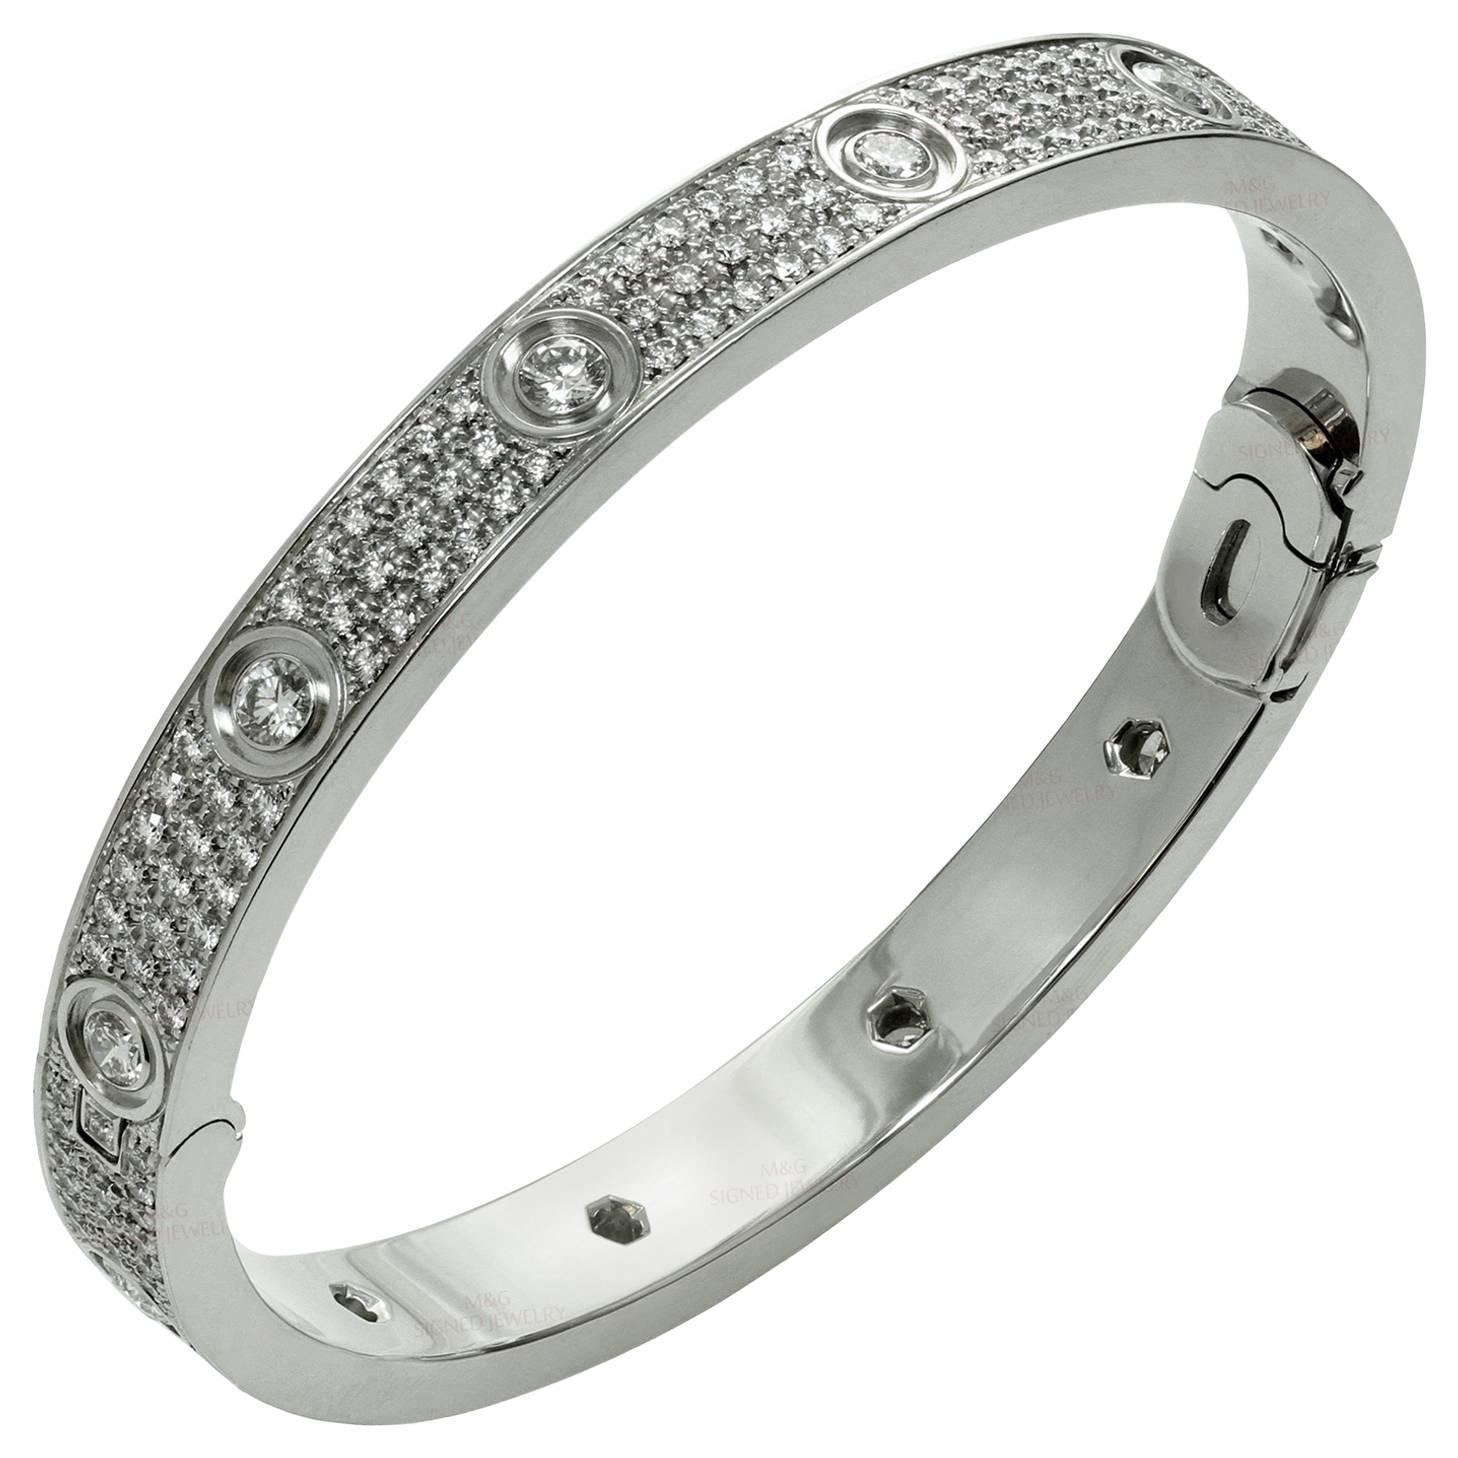  Cartier  Love Pave Diamond  Gold Bangle Bracelet  For Sale at 